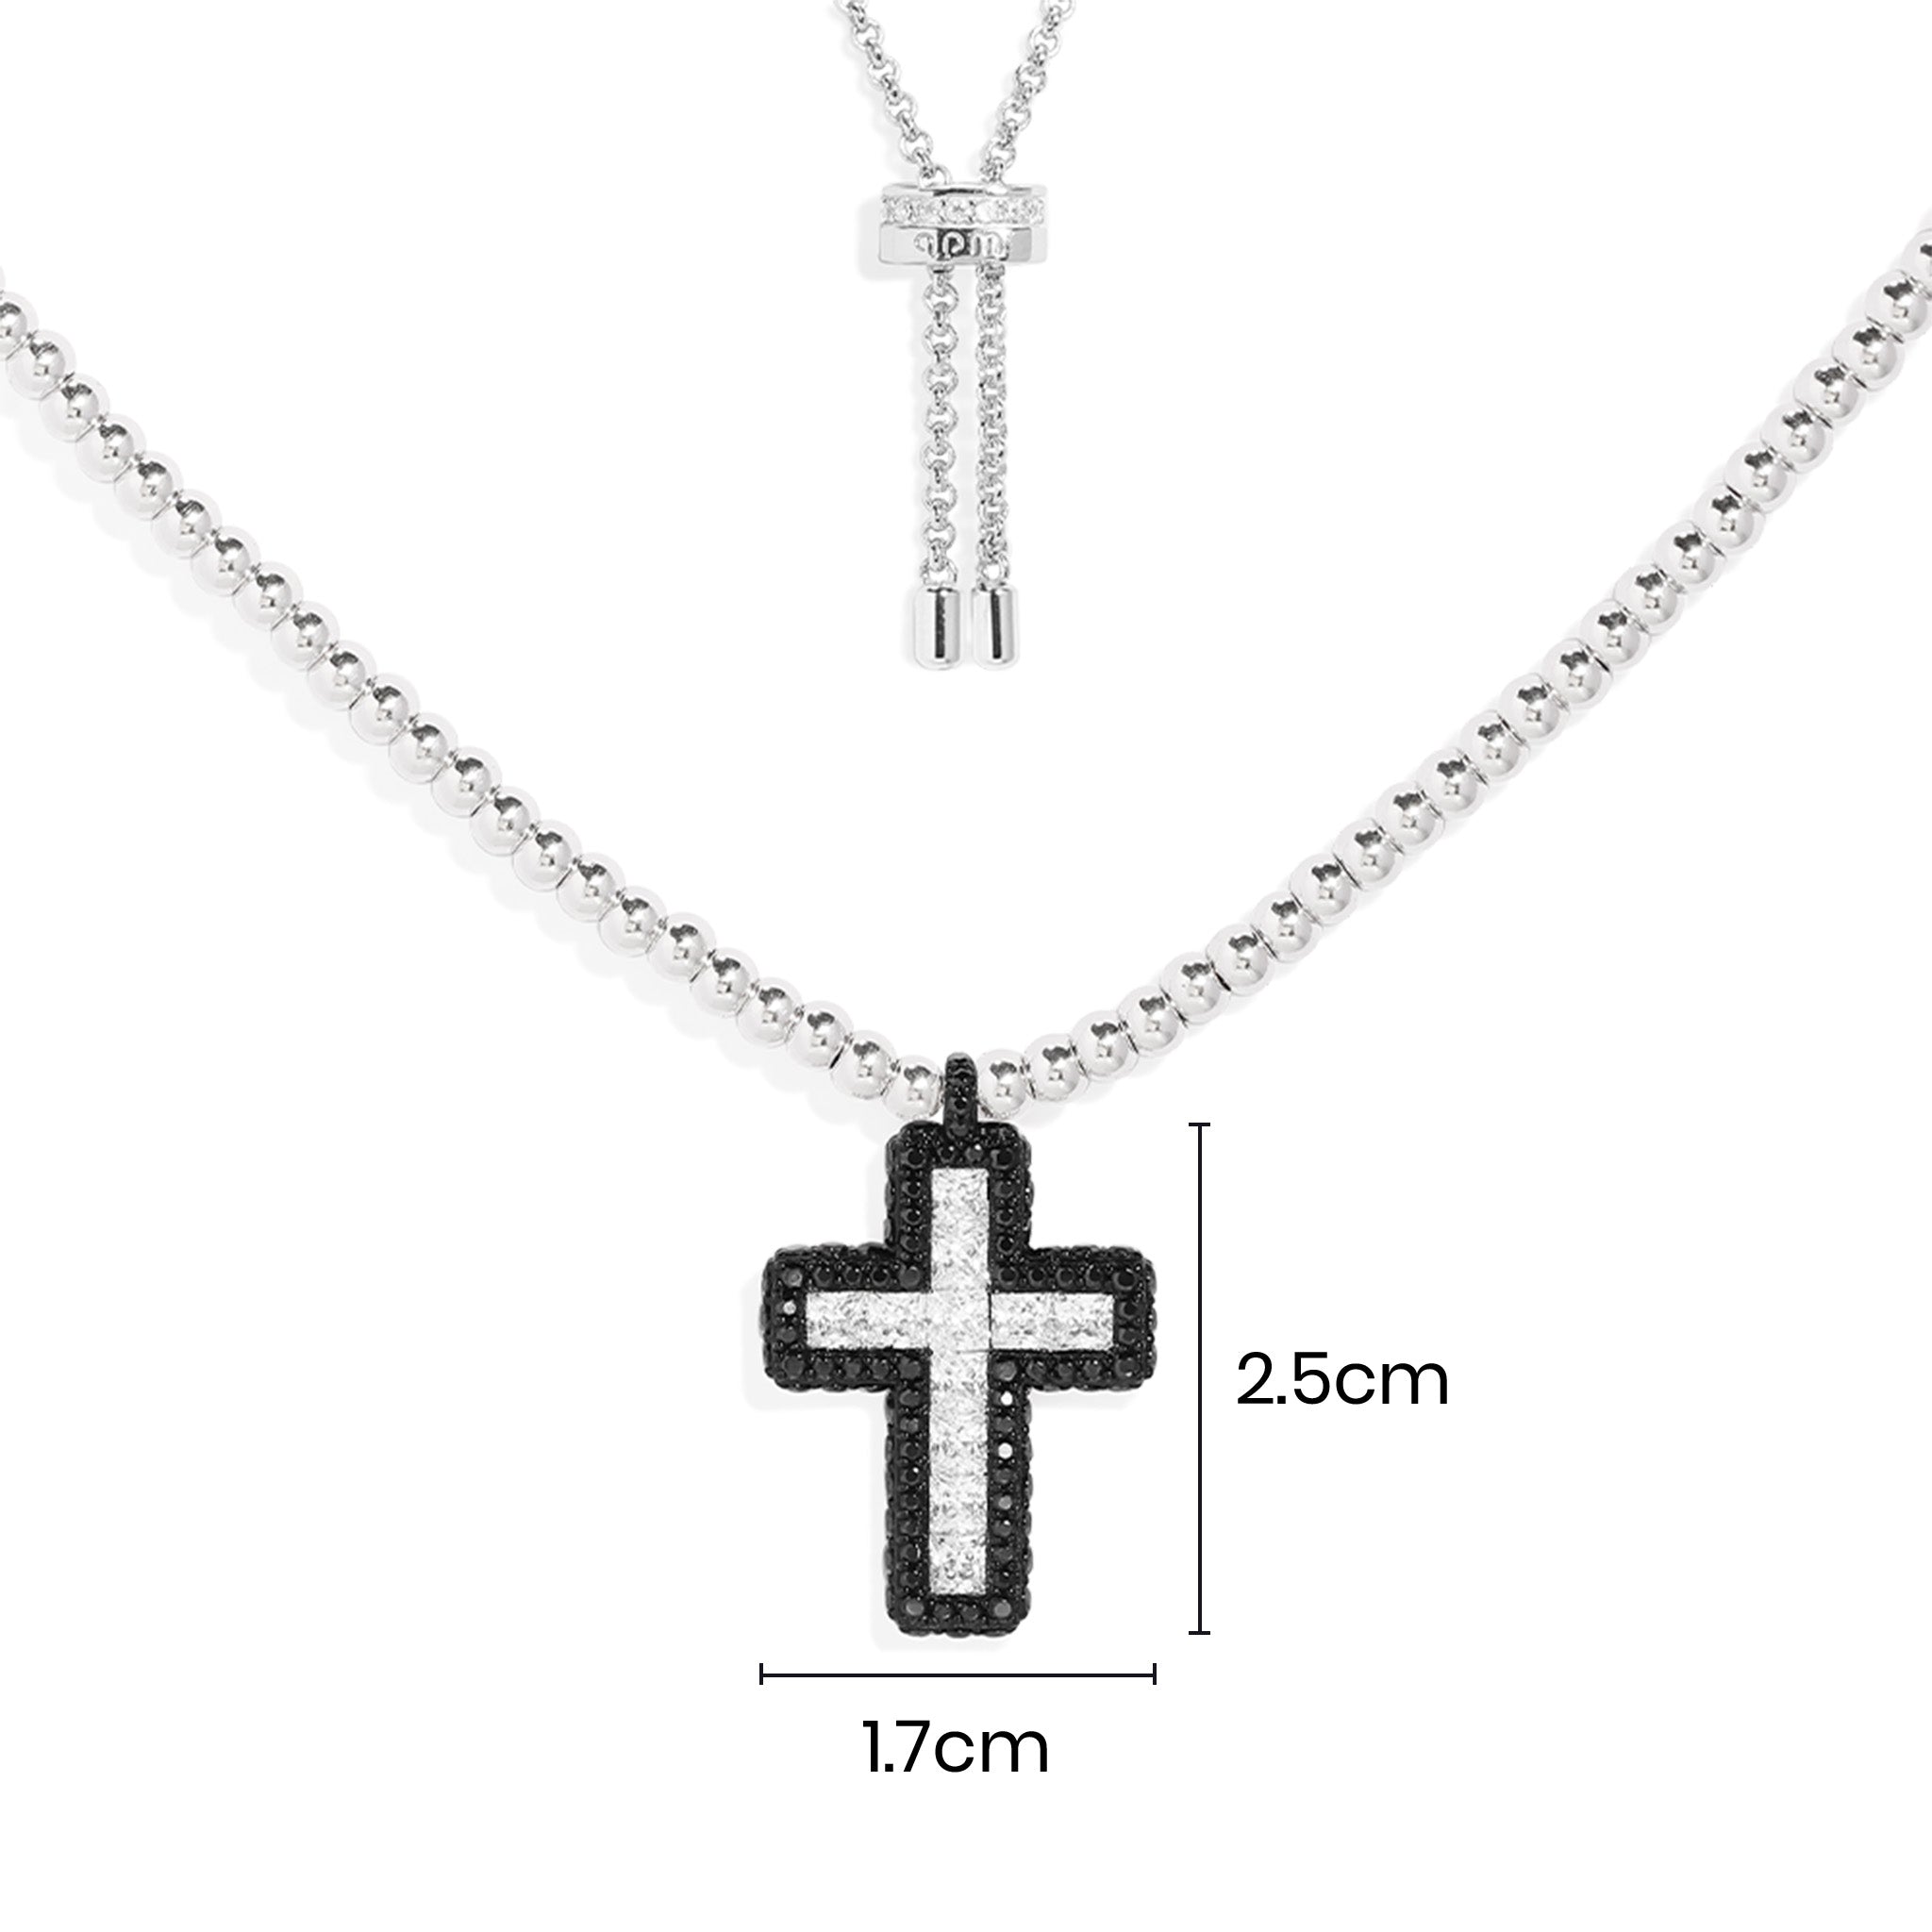 Black Pavé Cross Adjustable Necklace with Beads - APM Monaco